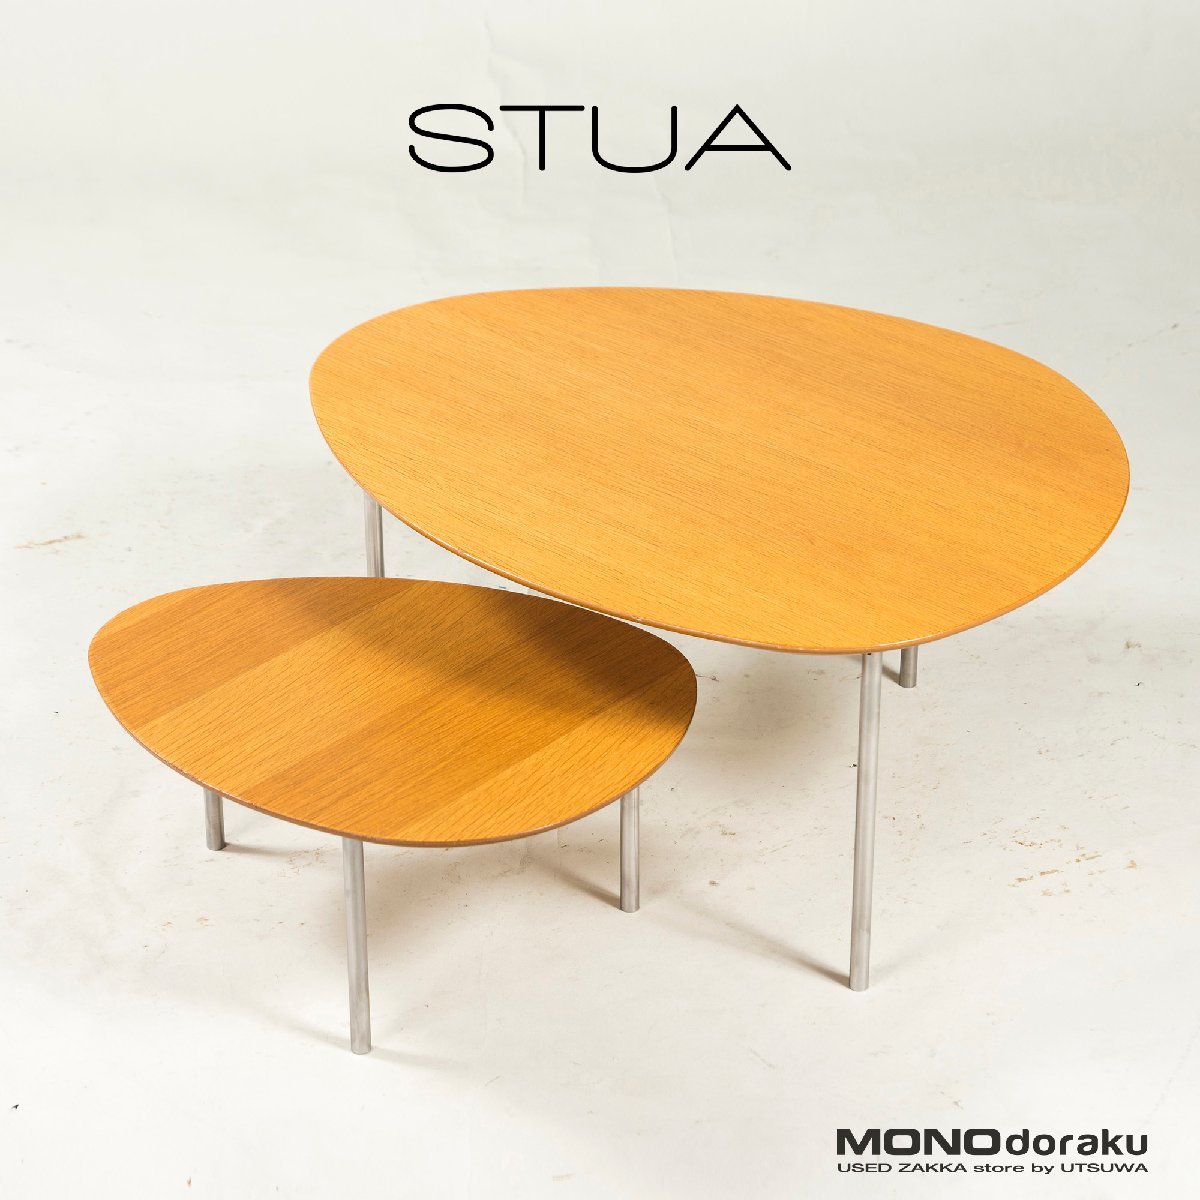 STUA/ストゥア Eclipse Table/エクリプステーブル 2個セット ネストテーブル センターテーブル 北欧モダン スペイン製